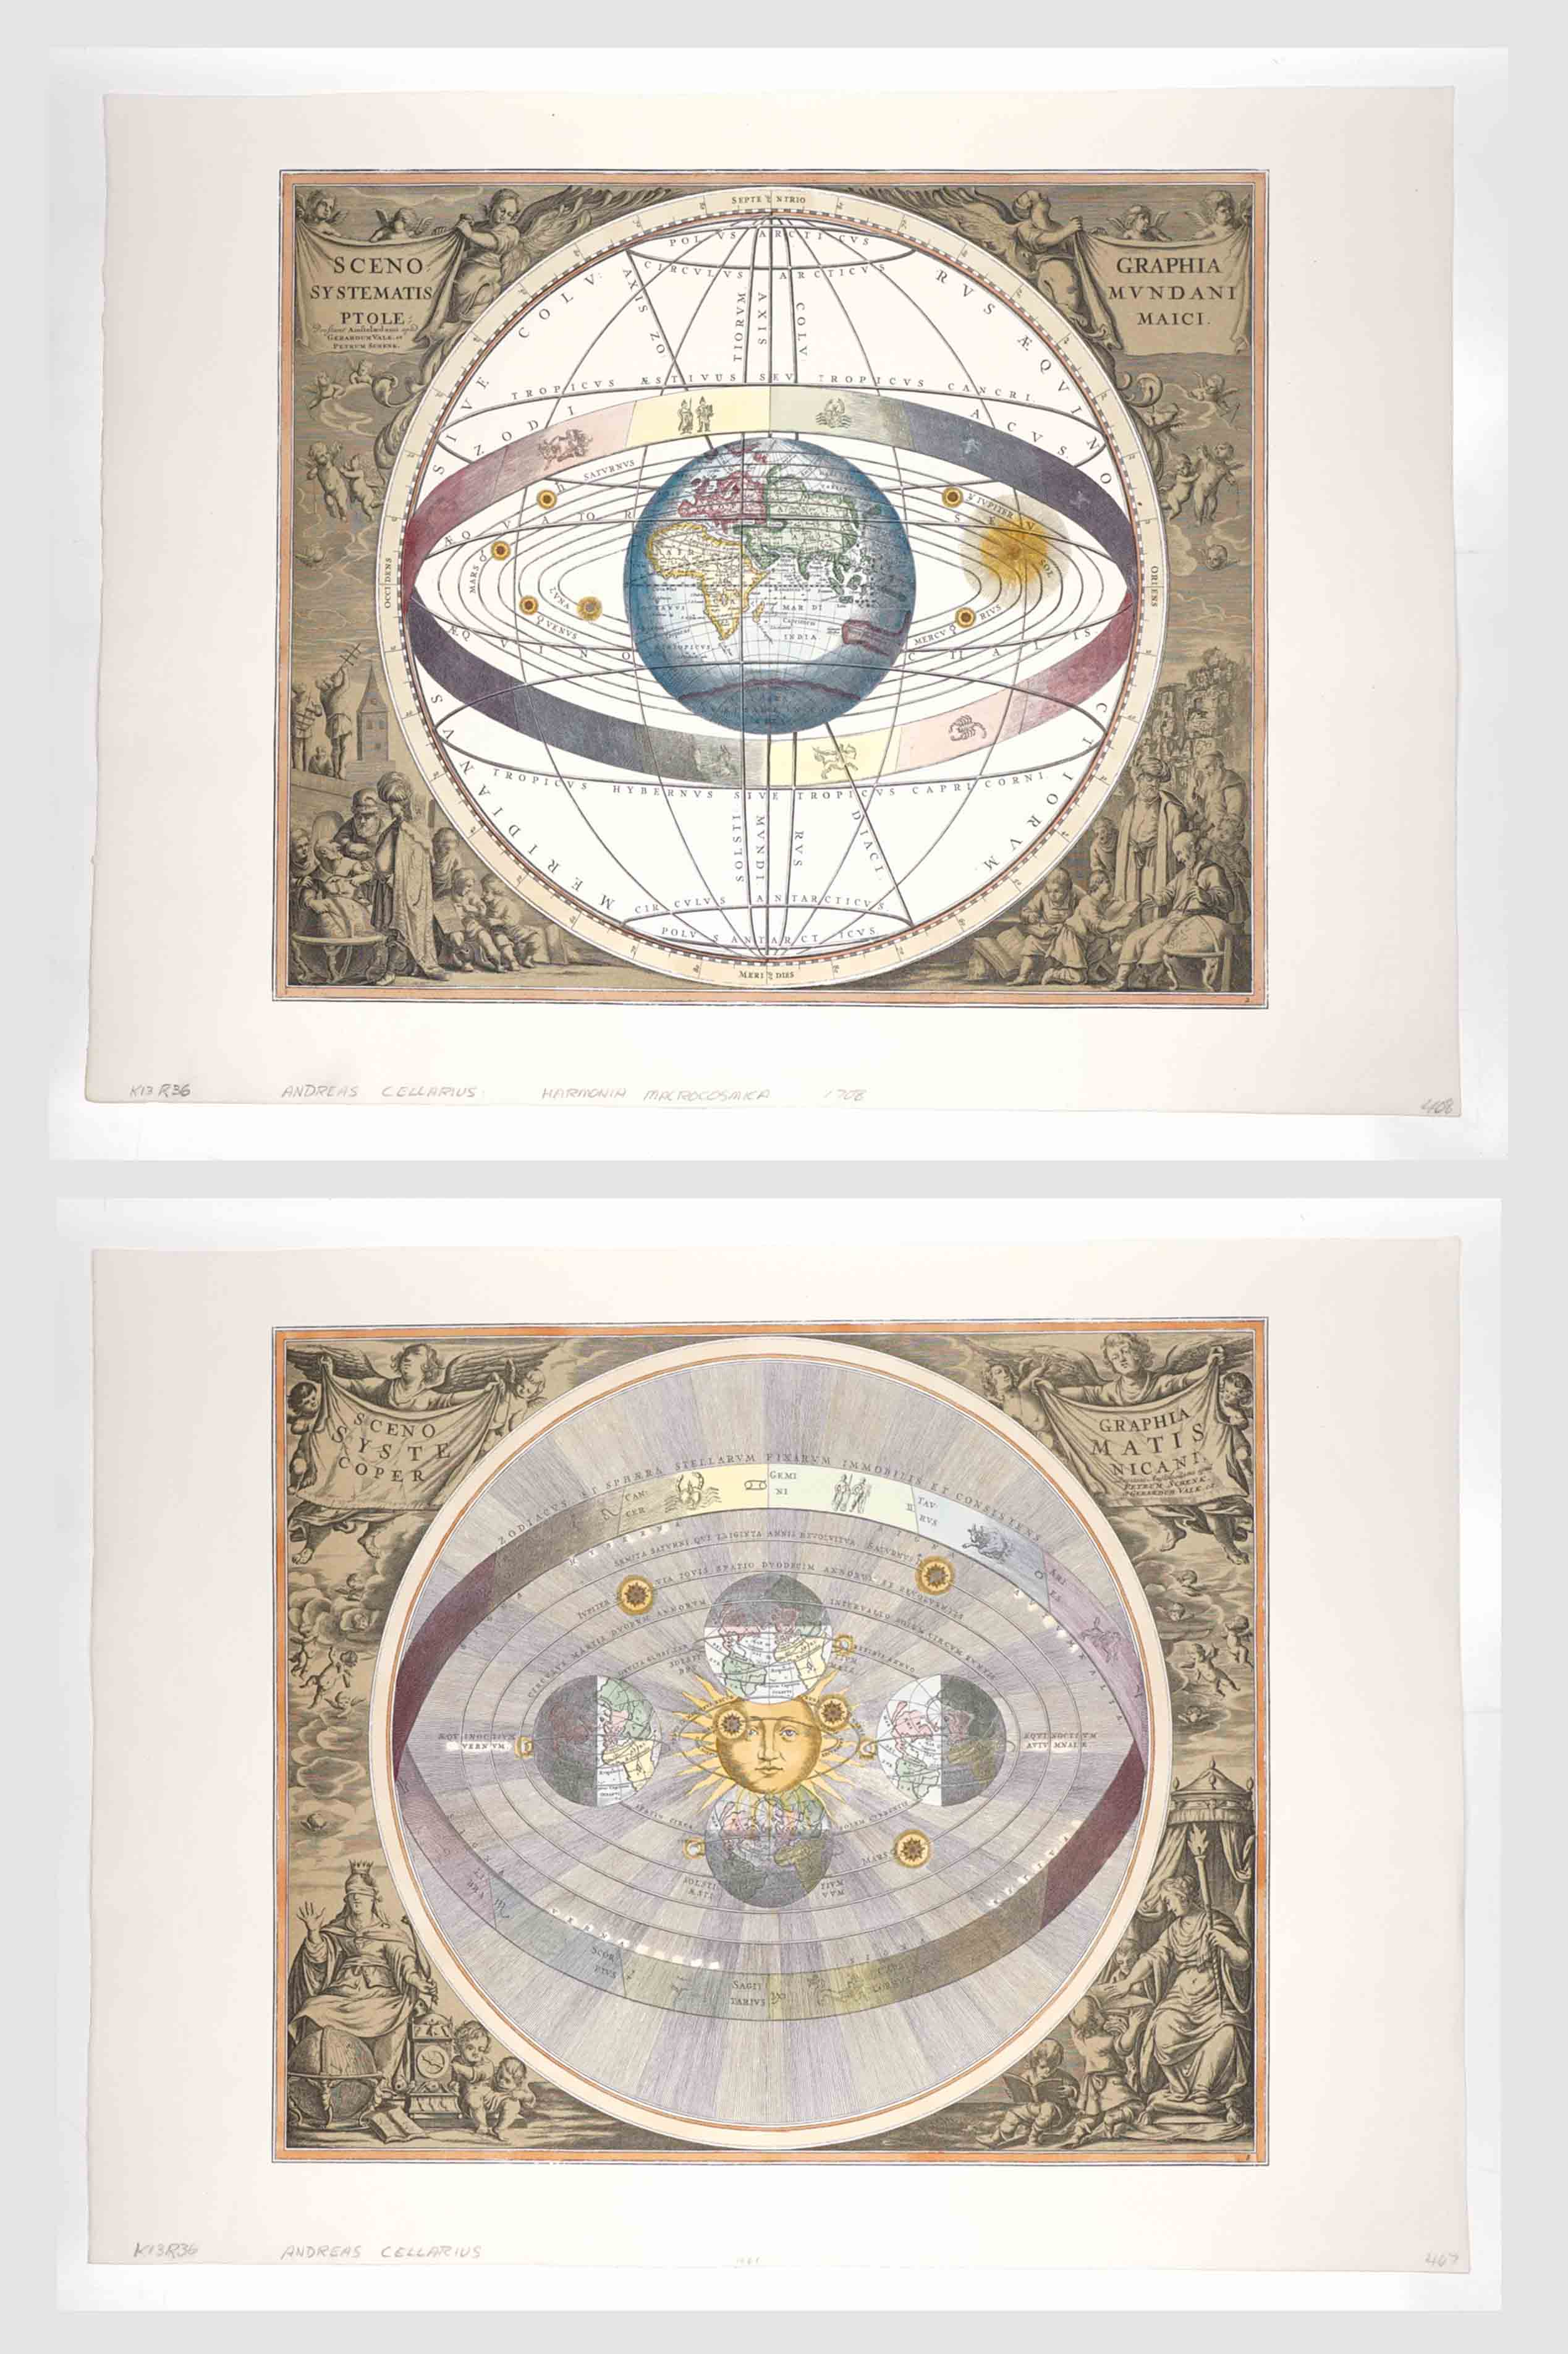 Andreas Cellarius Engravings [Celestial]